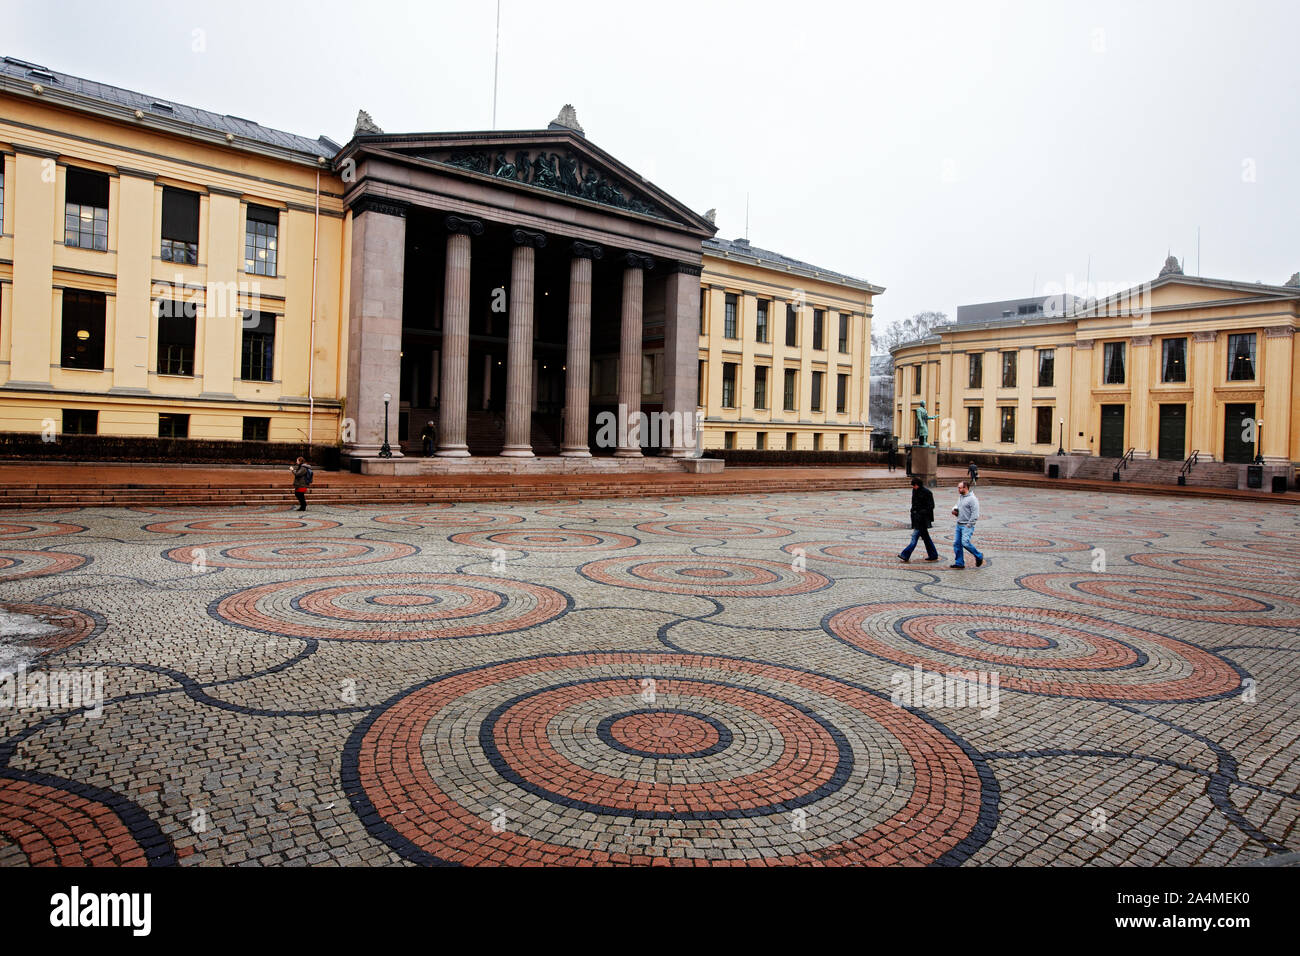 The old original university building in Oslo Stock Photo